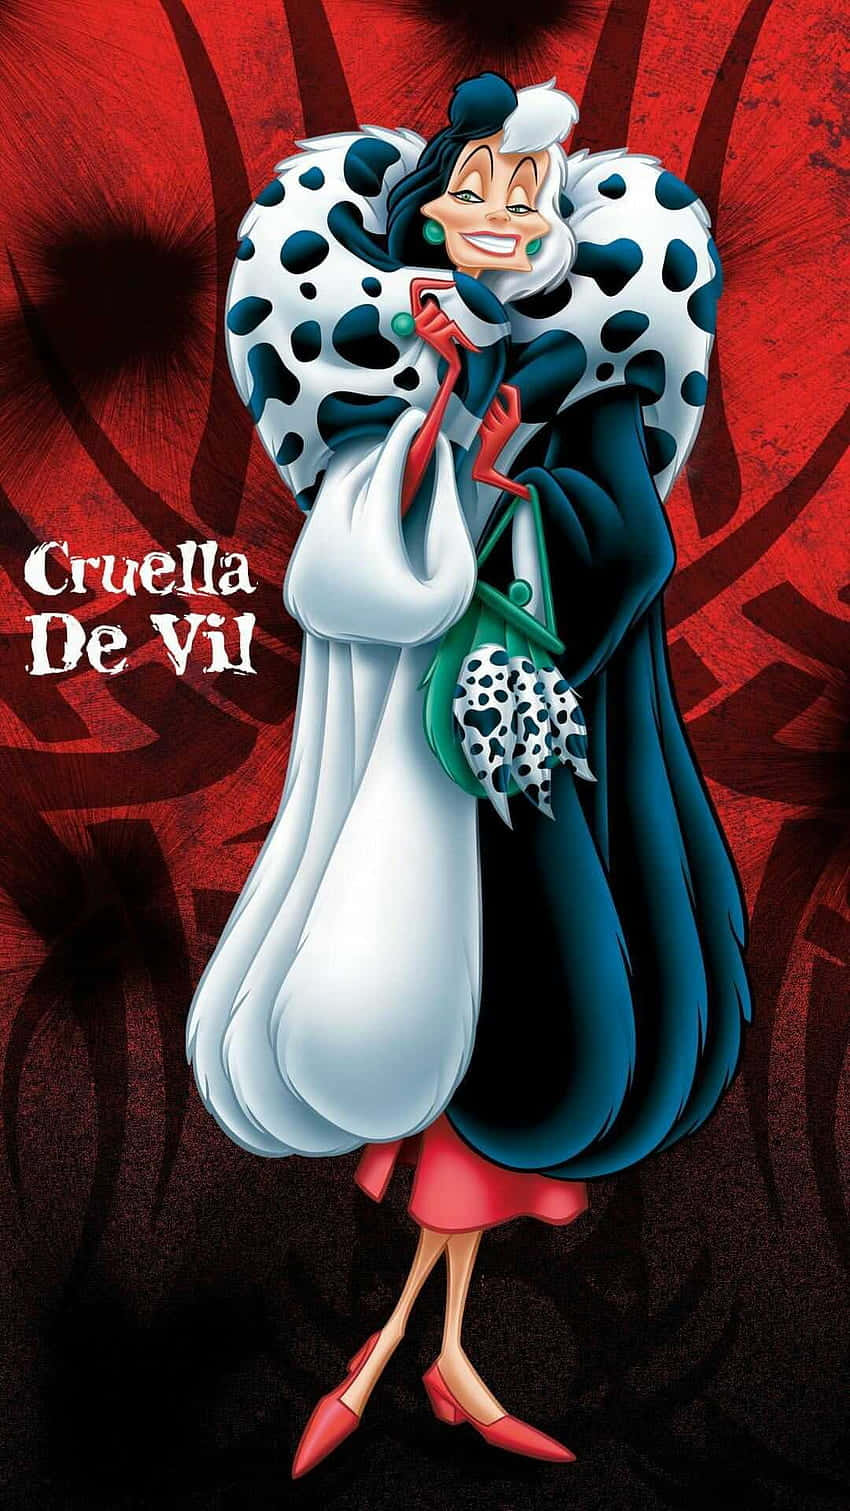 Cruella de Vil living in her glamorous world